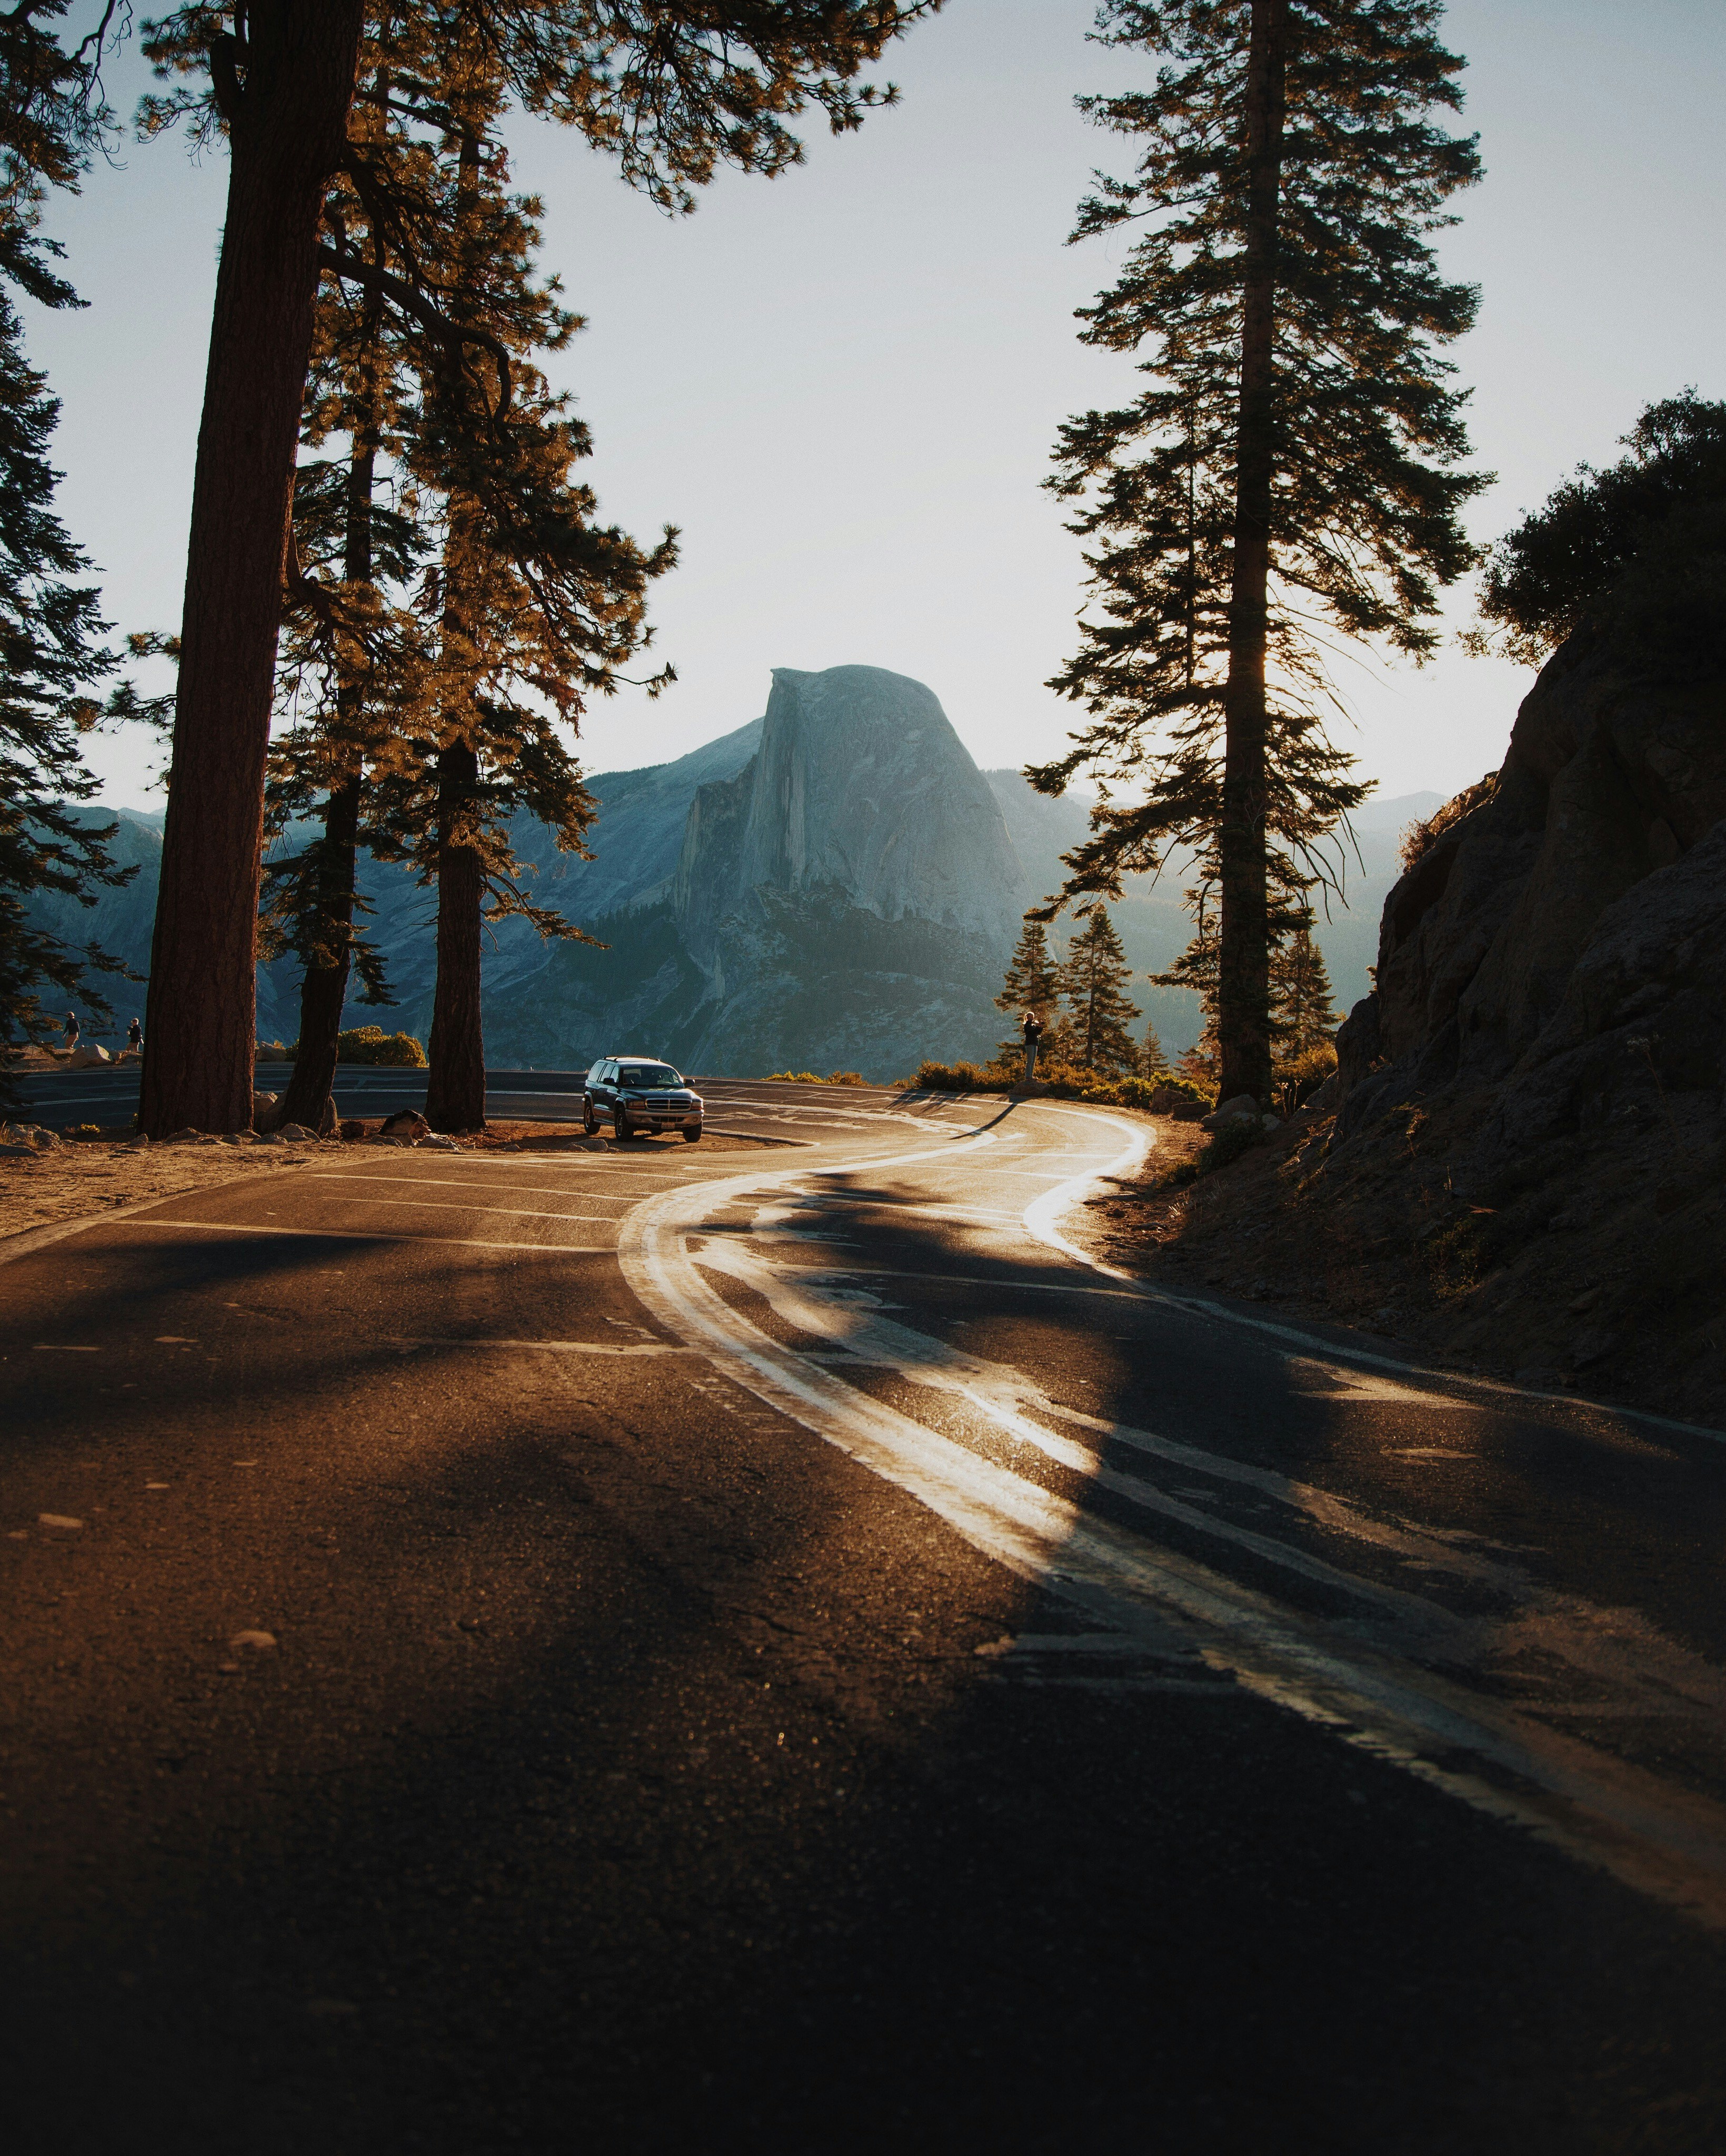 Driving through California during golden hour